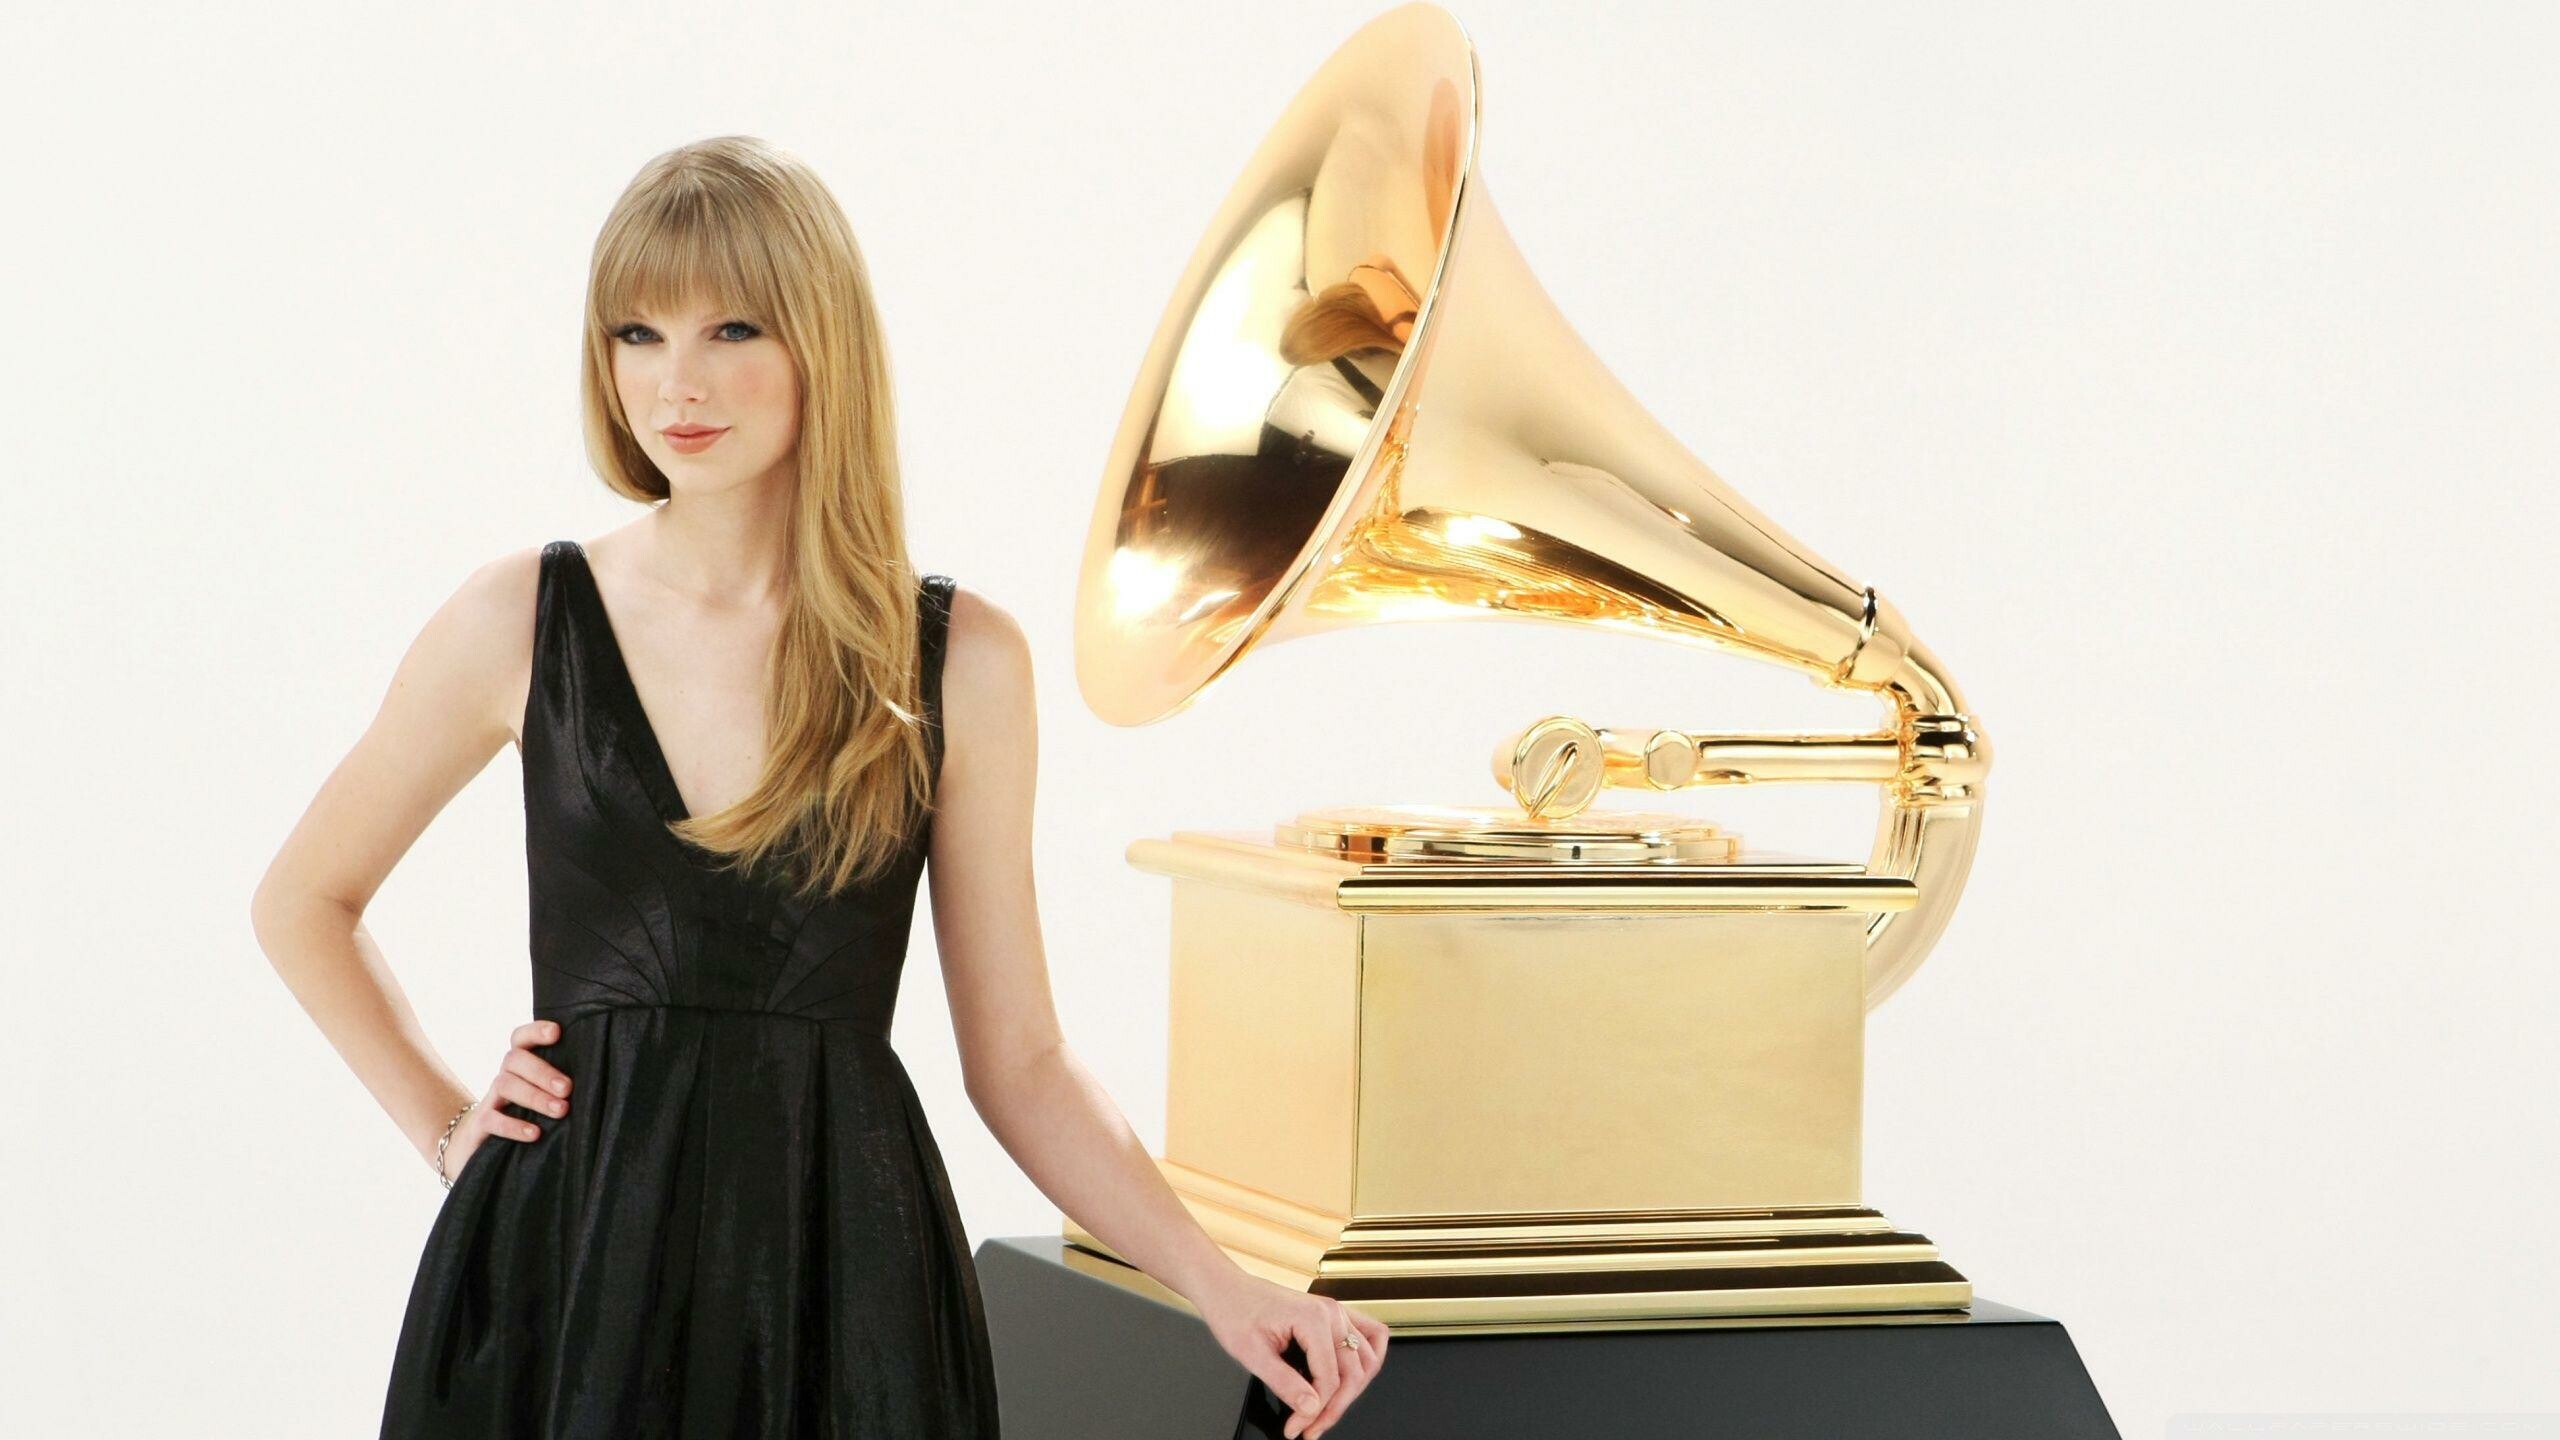 Grammys, The Grammys, Red carpet glamour, Star-studded event, 2560x1440 HD Desktop